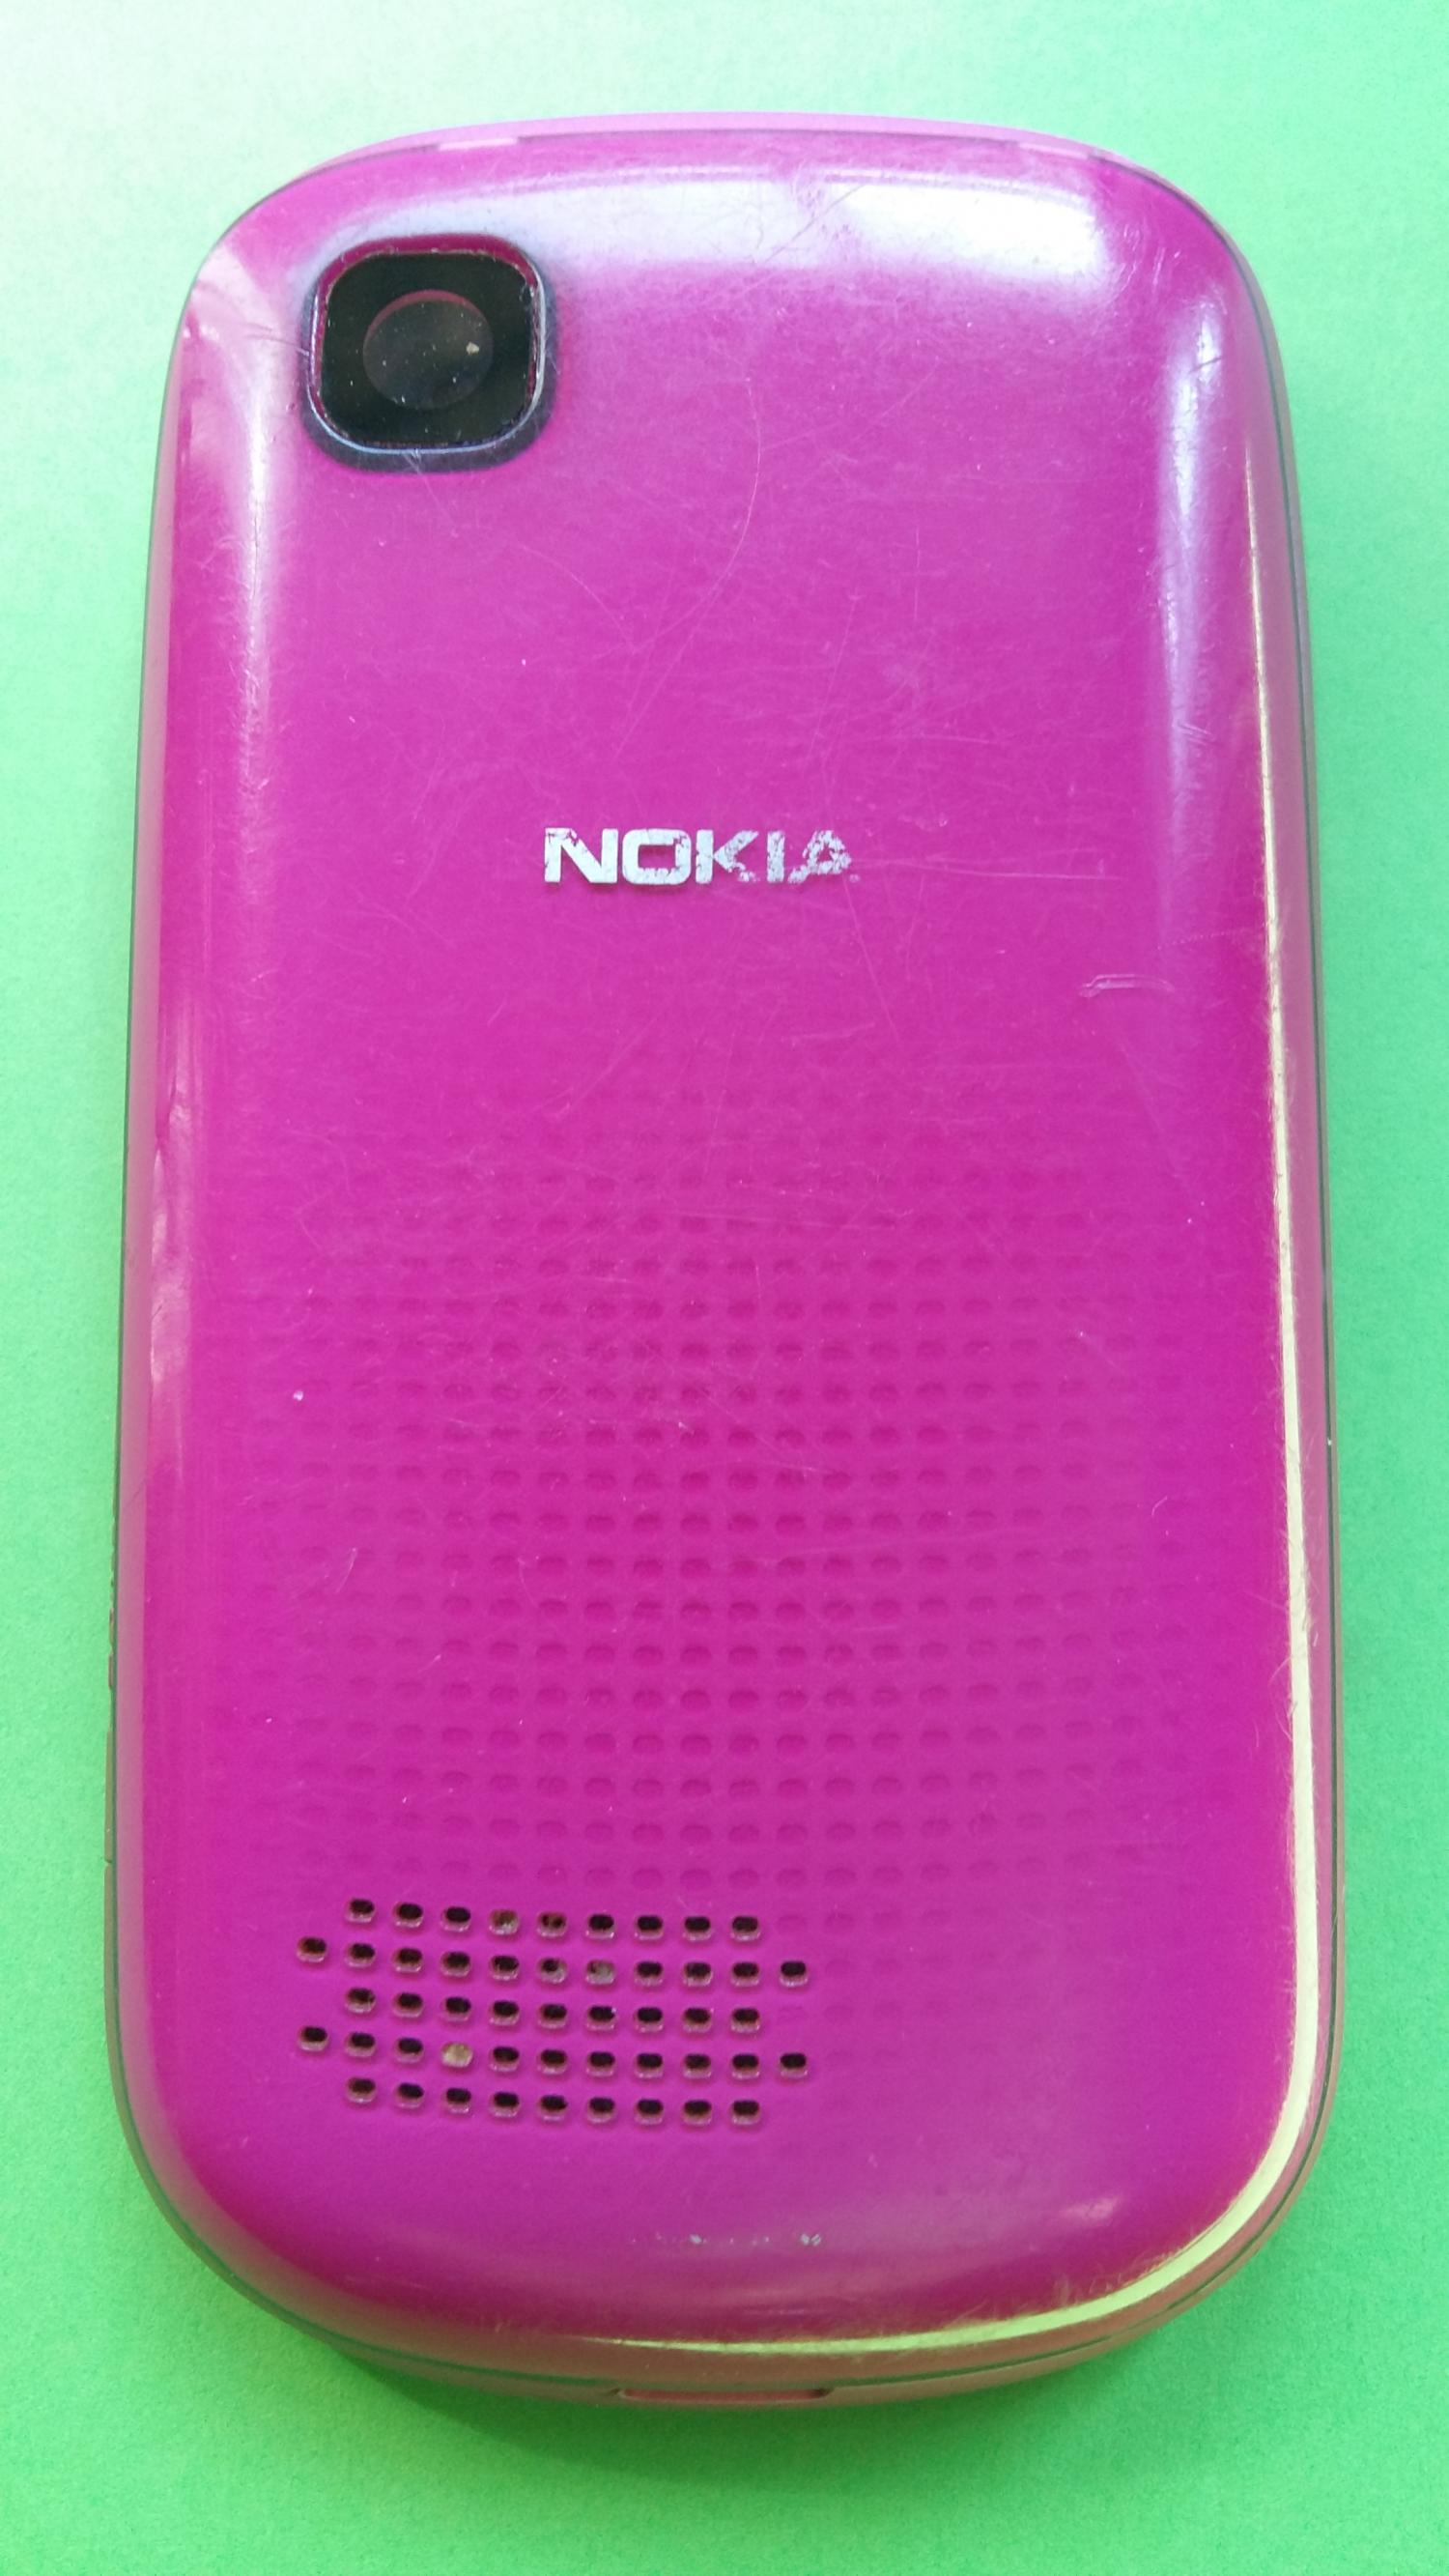 image-7299023-Nokia 200 Asha (1)2.jpg